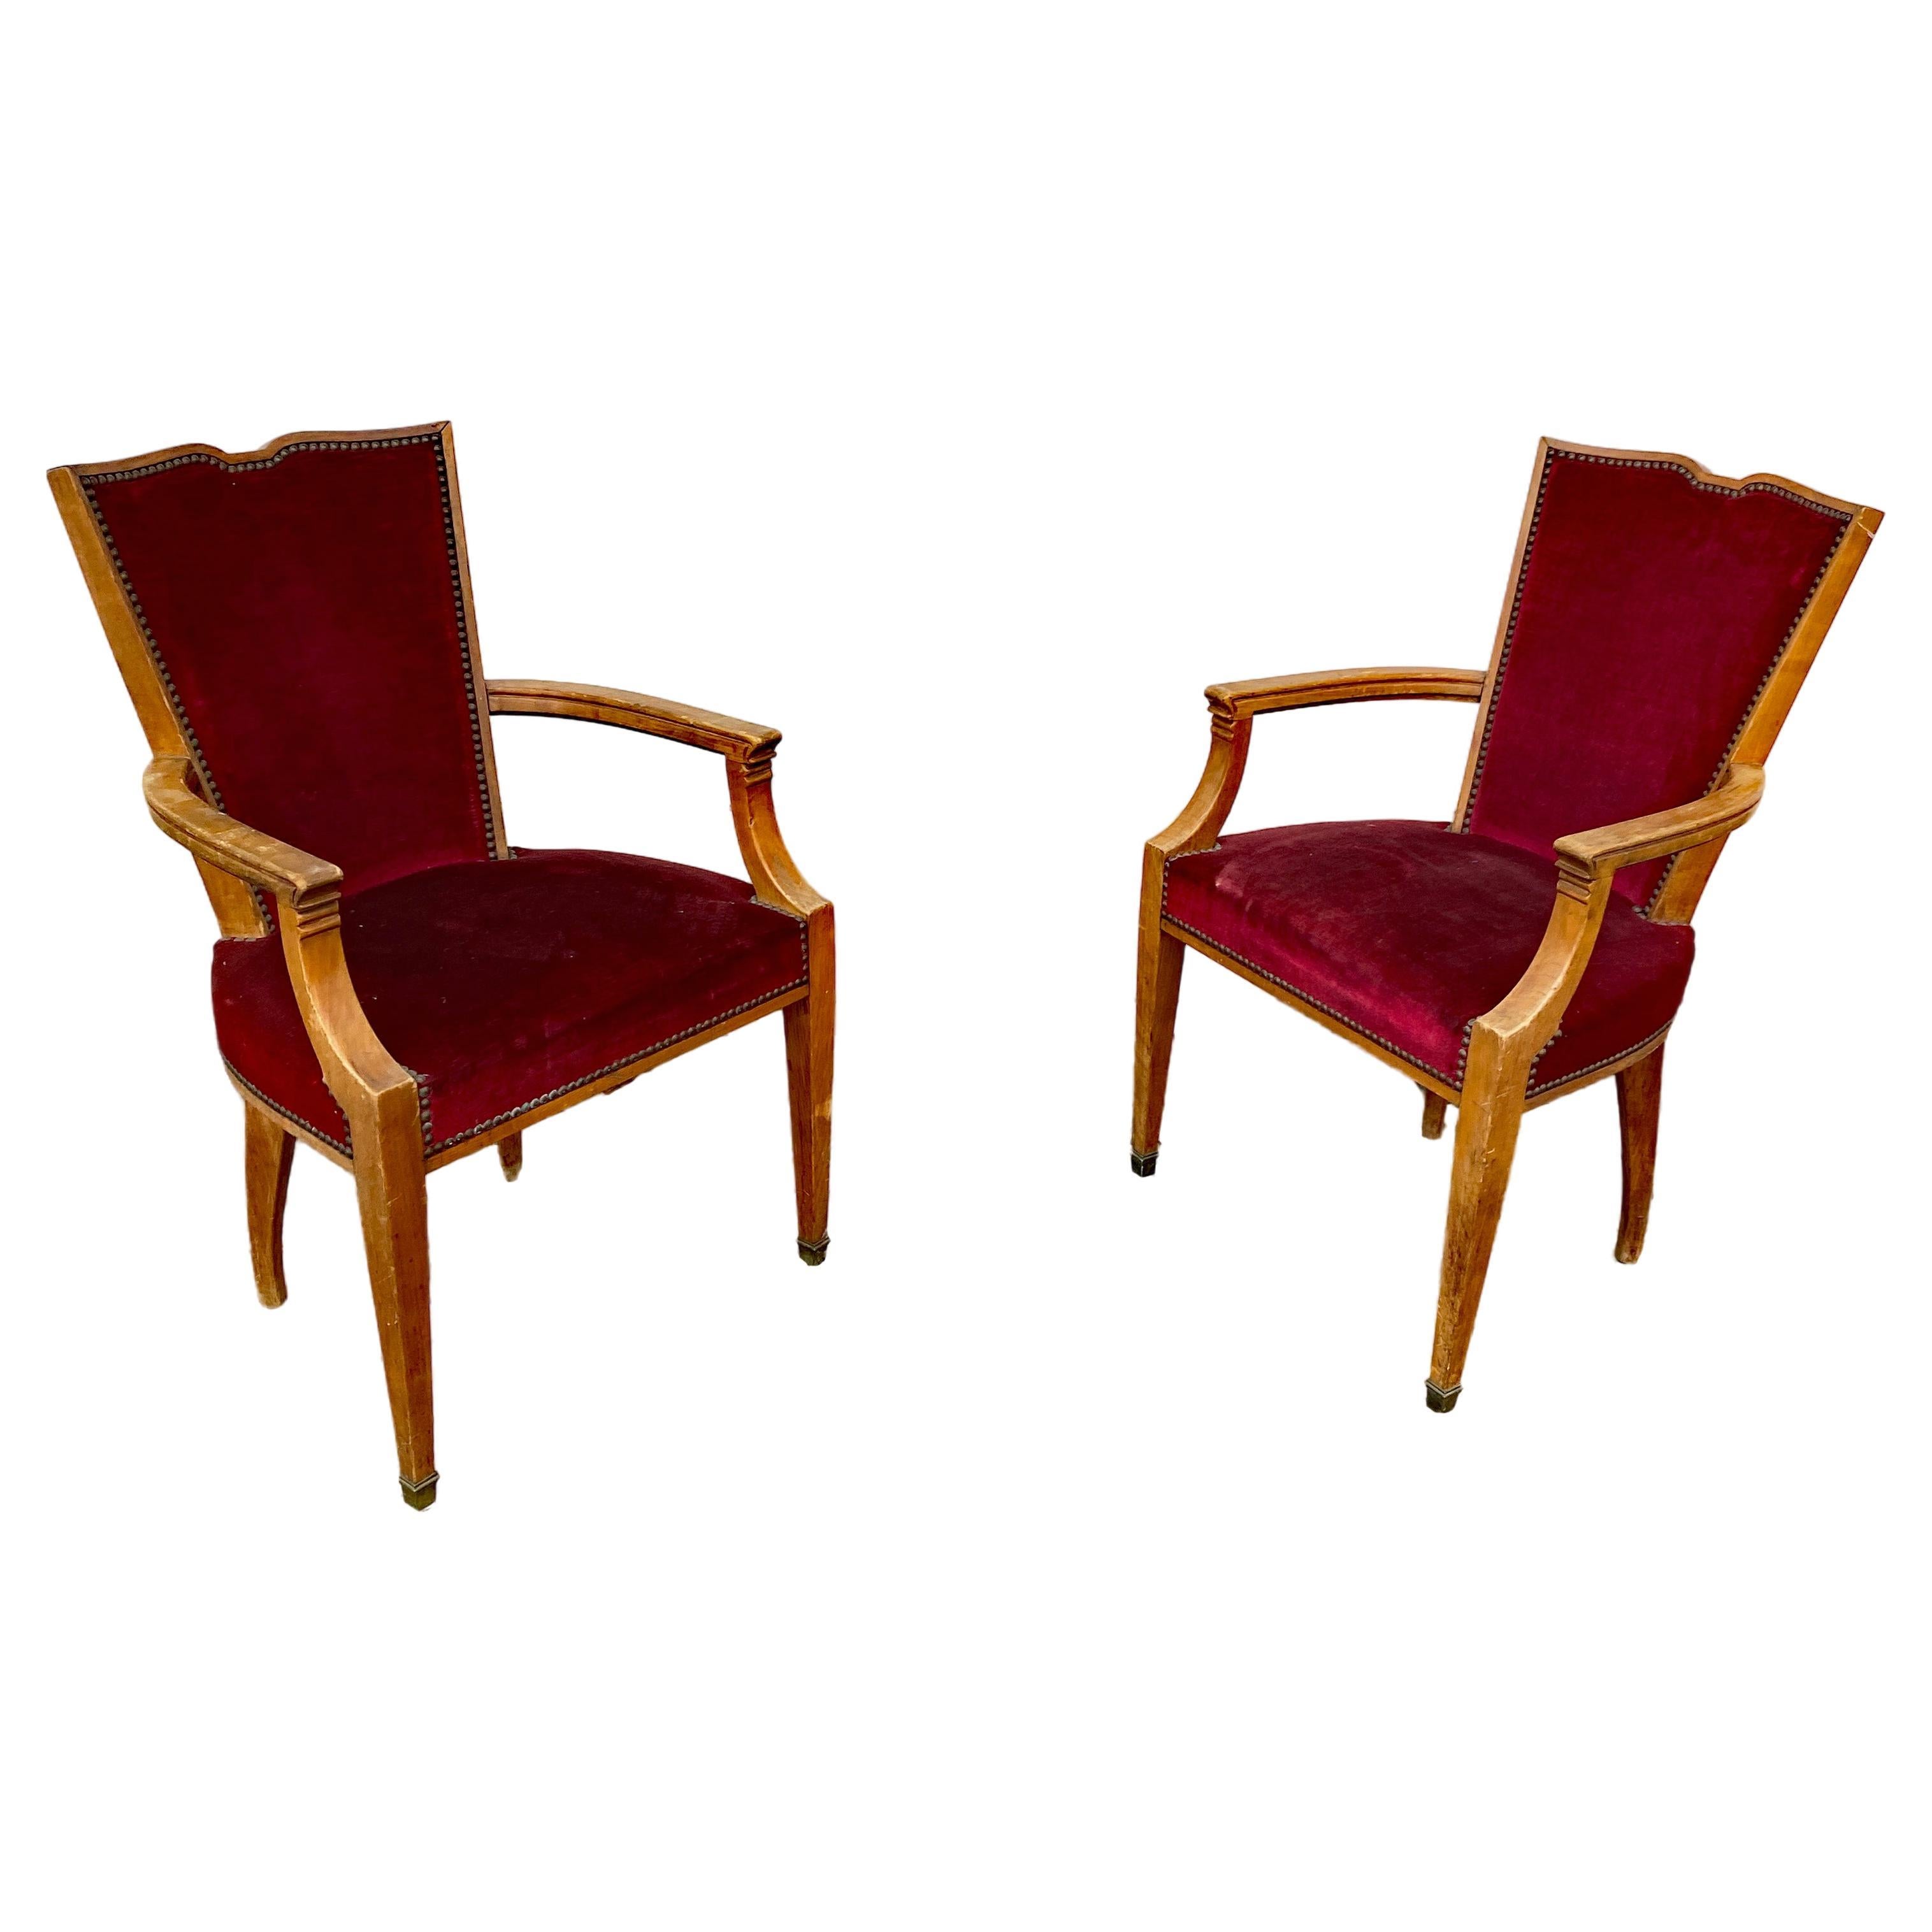 Pair of art deco armchairs circa 1940/1950